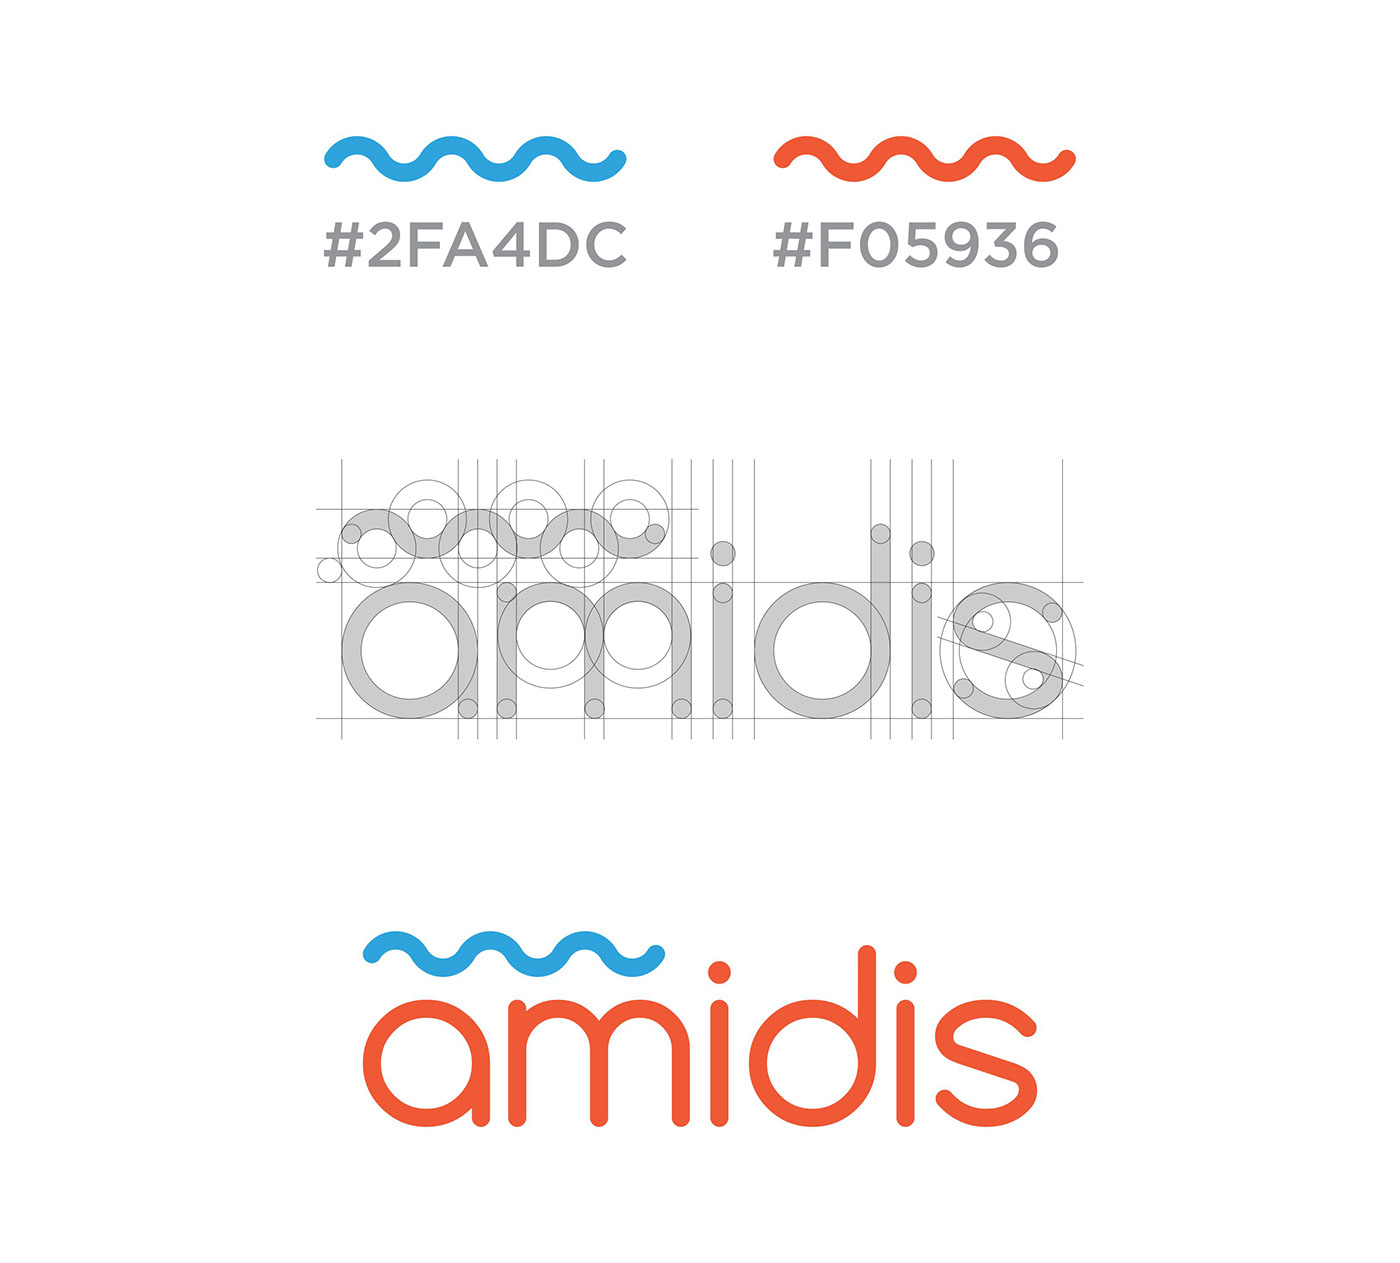 mineral water redesign Logo redesign rebranding amidis logo